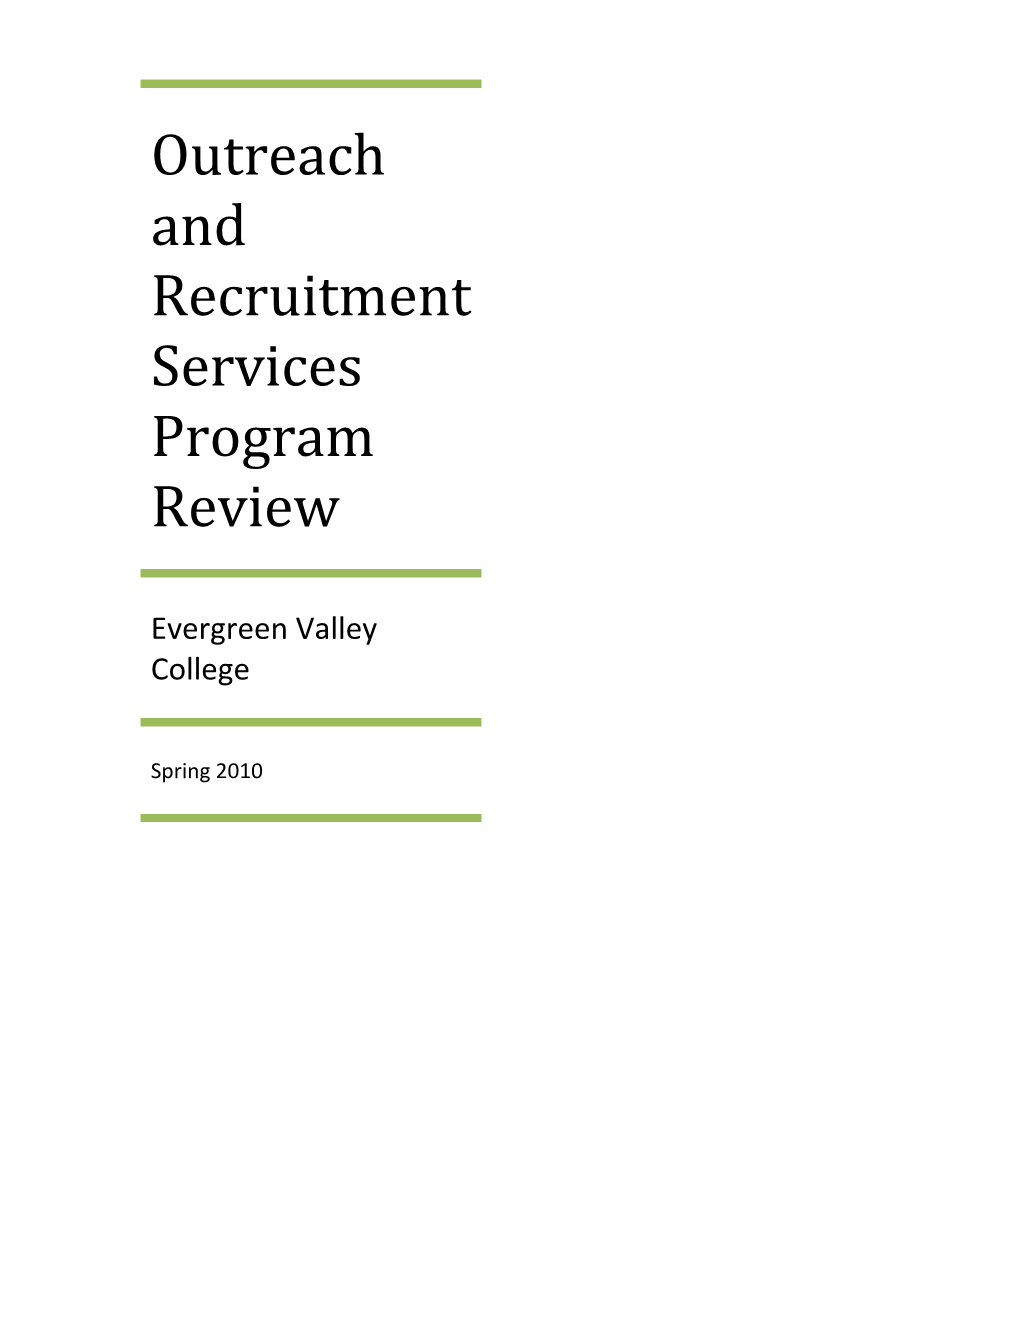 Outreach and Recruitment Services Program Review